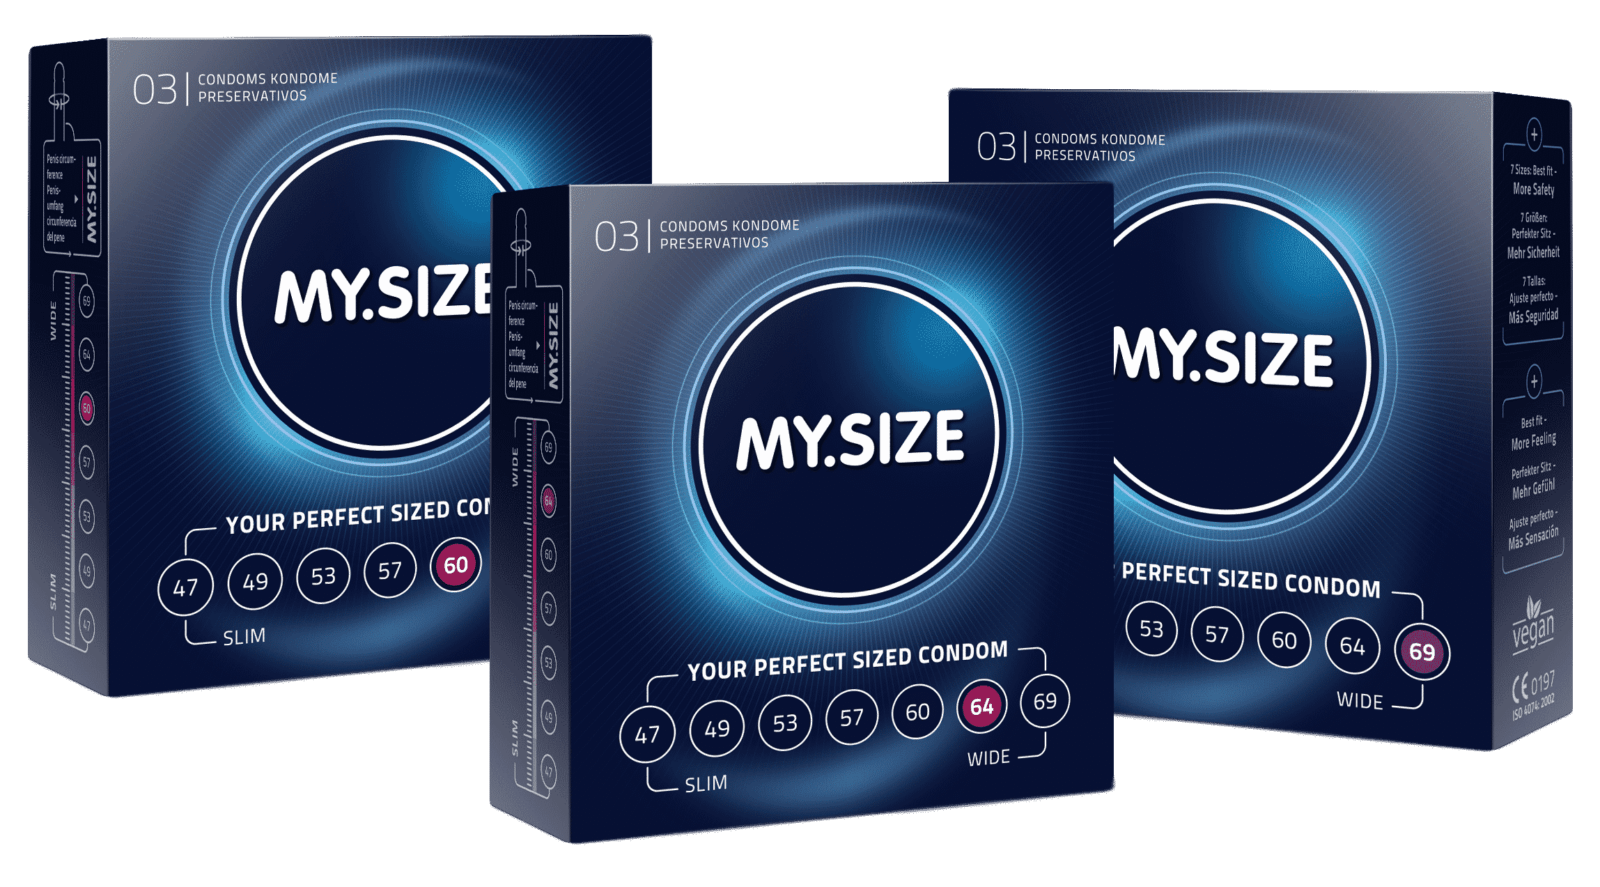 MY.SIZE Probierset 60-64-69 (3x3 Kondome)